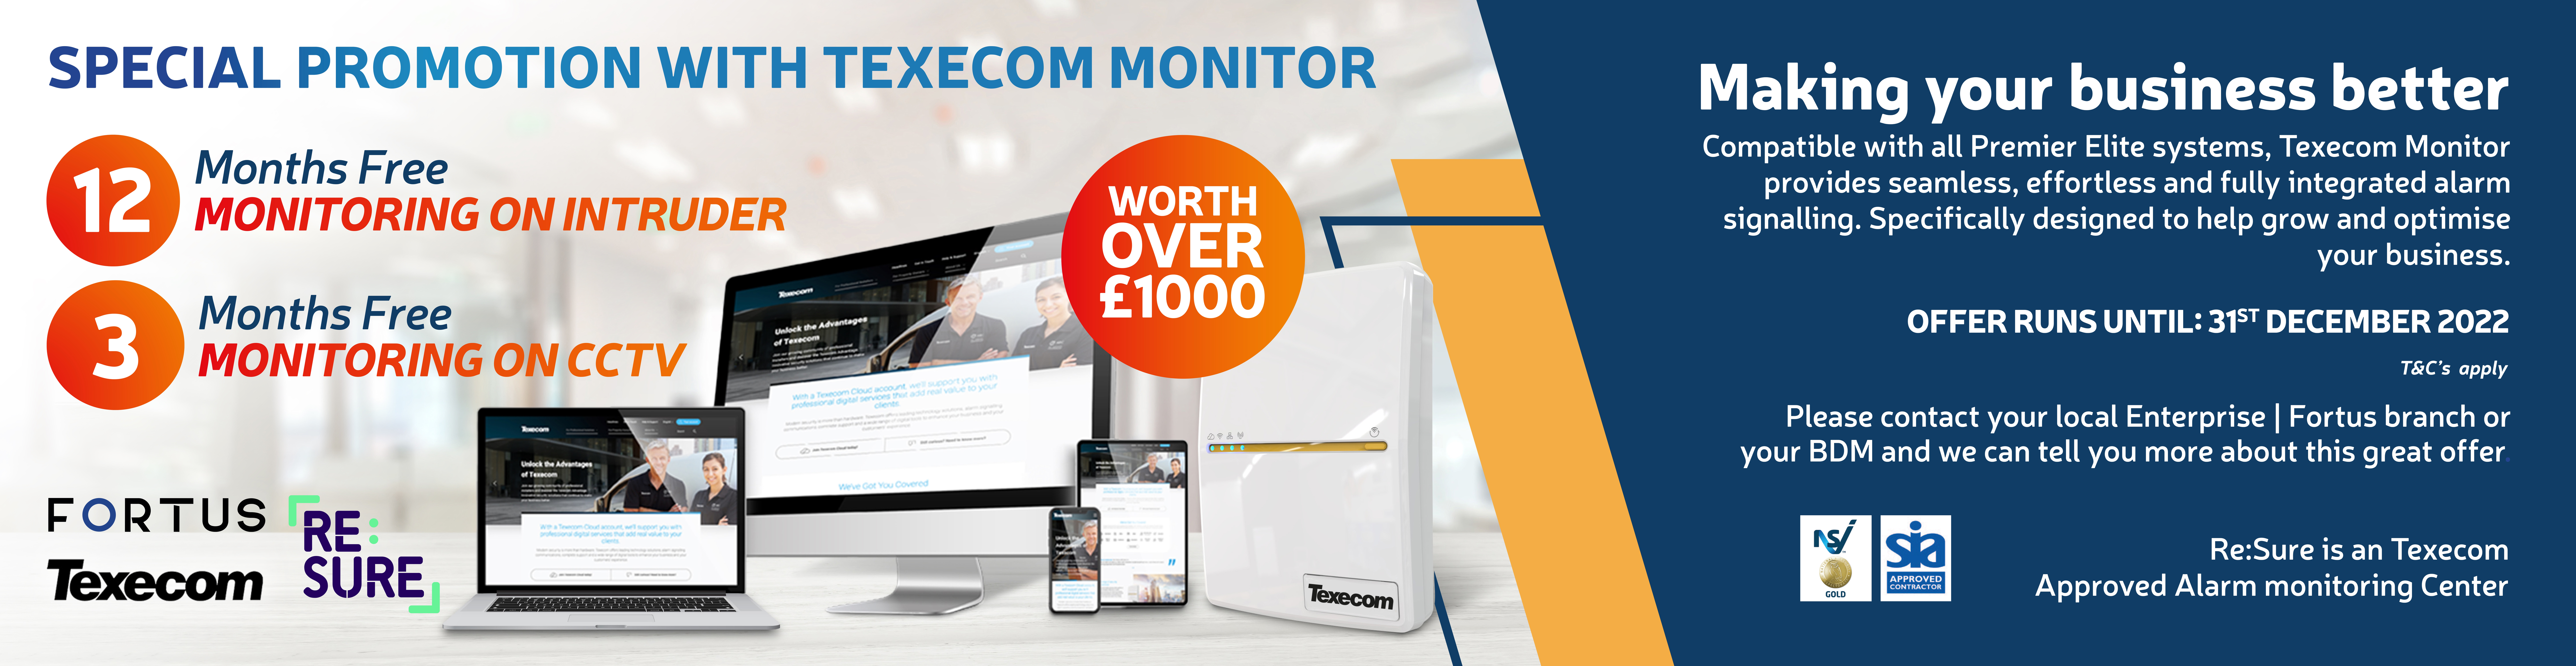 Texecom Monitor